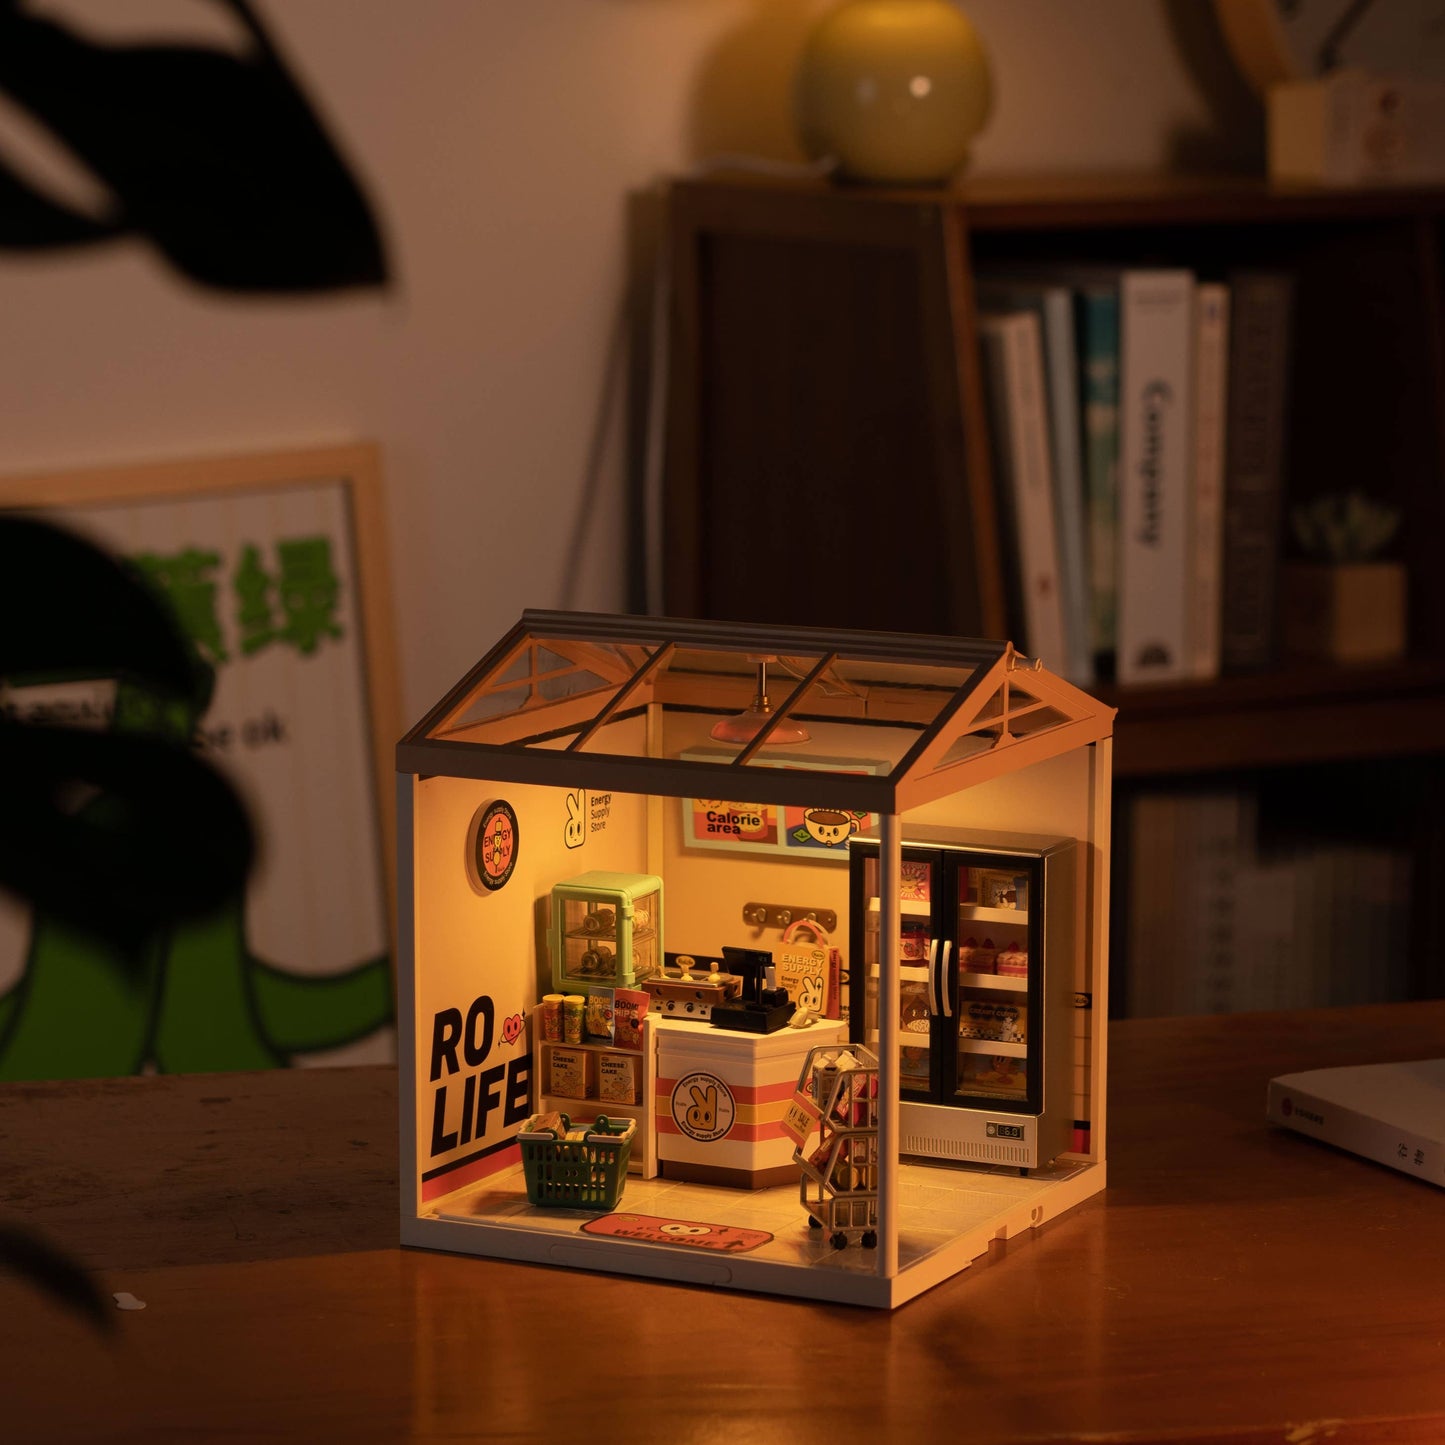 DIY Miniature Model Kit: Energy Supply Store